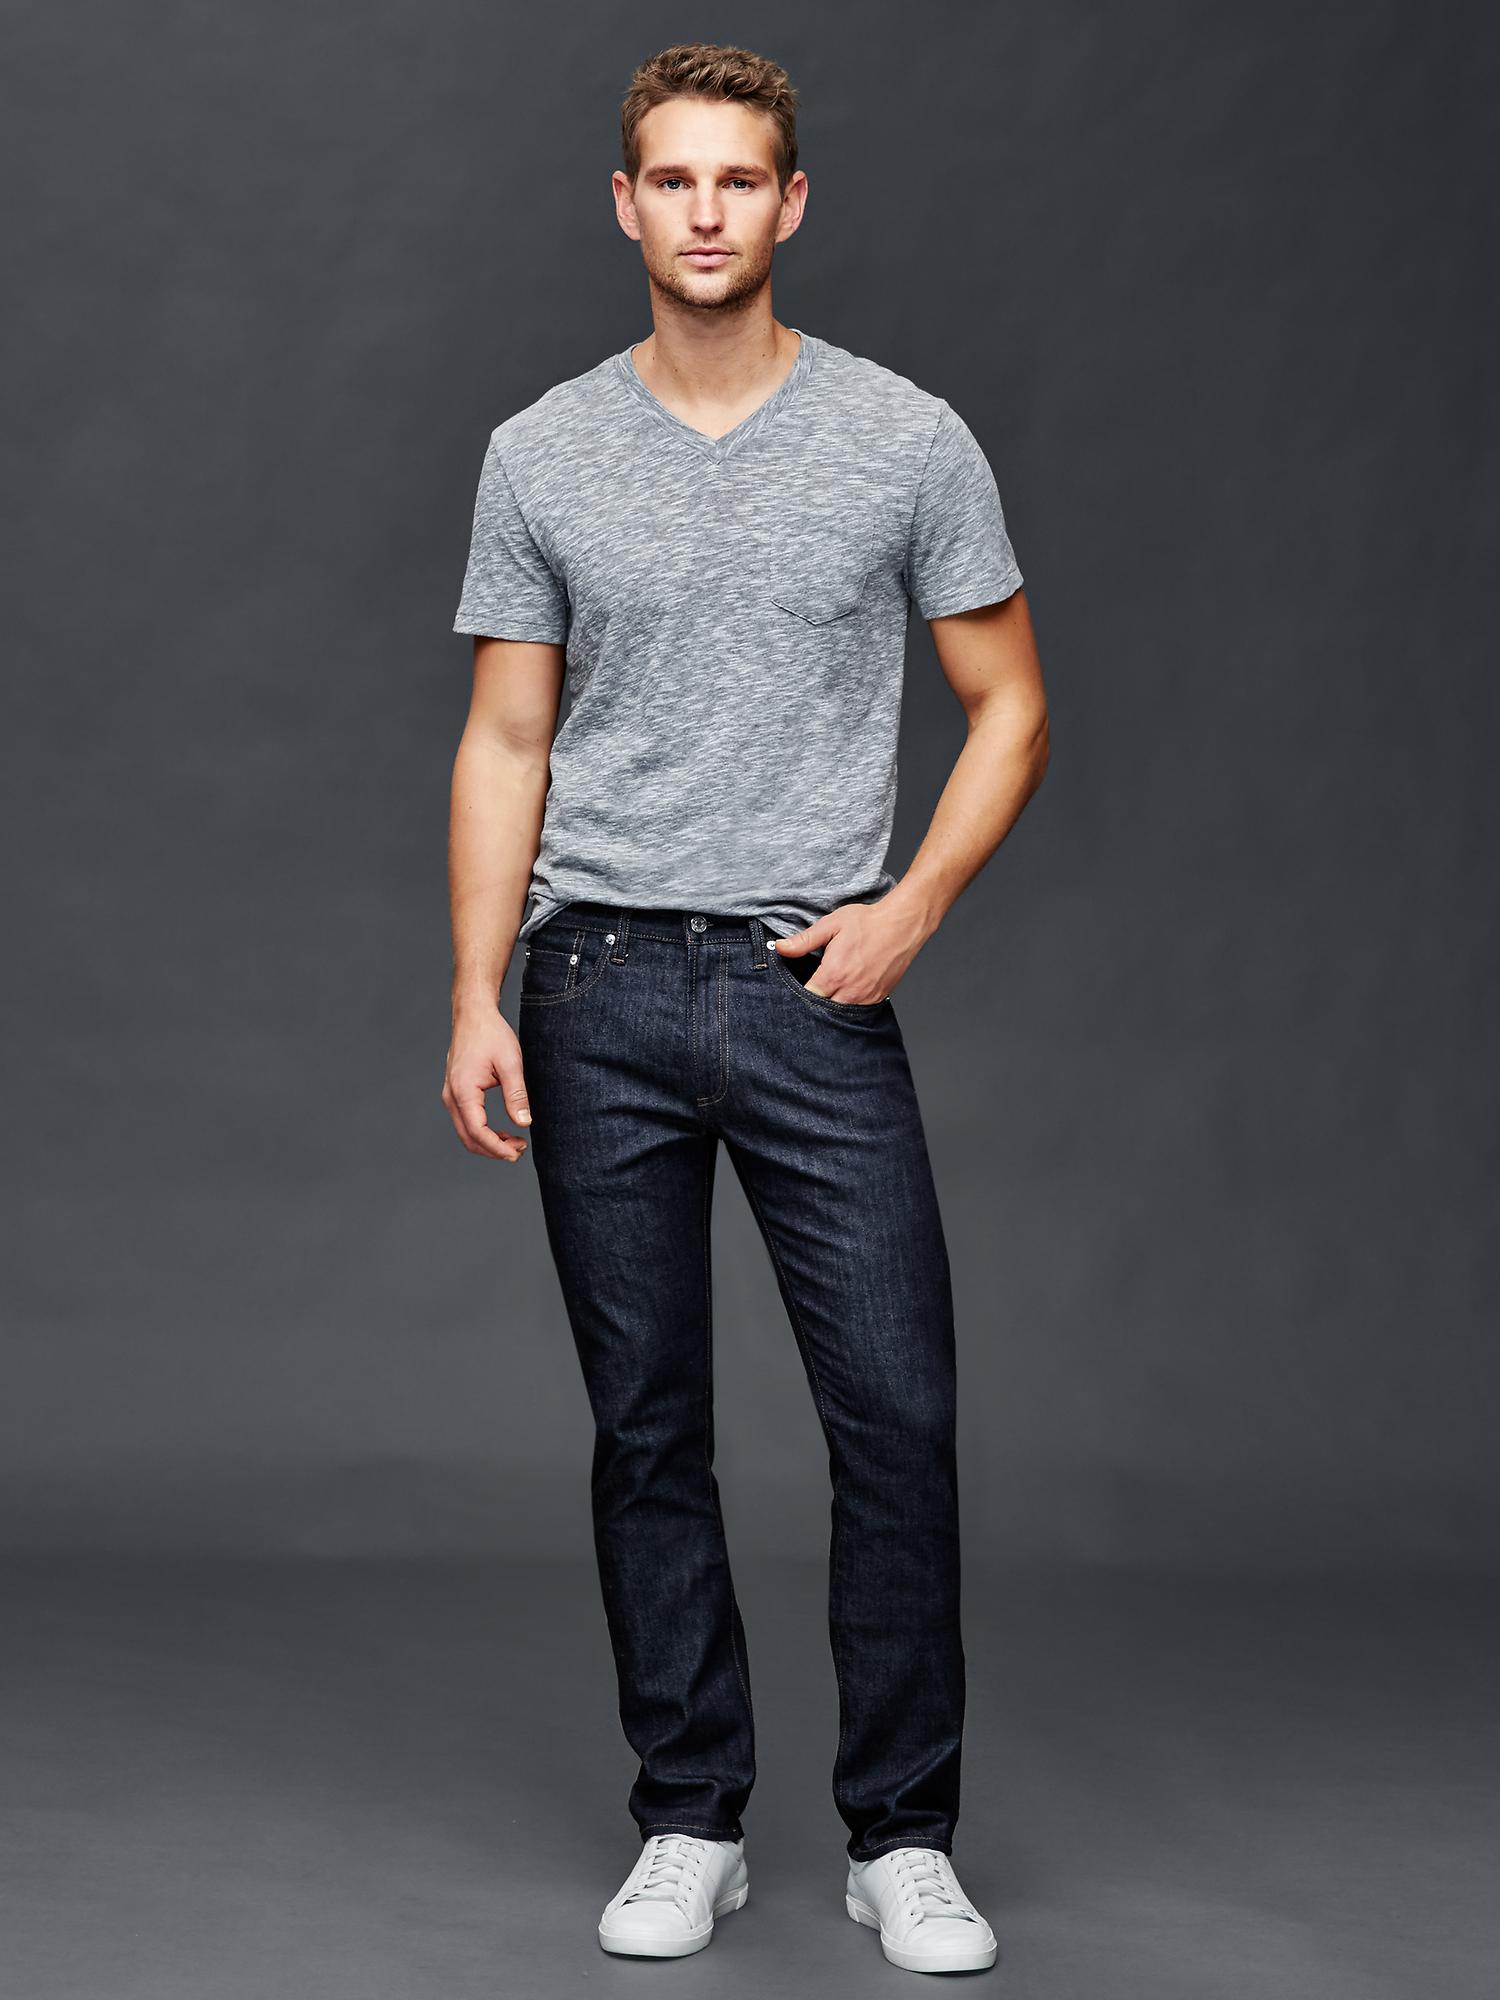 GAP Soft Wear Slim Fit Jeans with GapFlex Medium Indigo